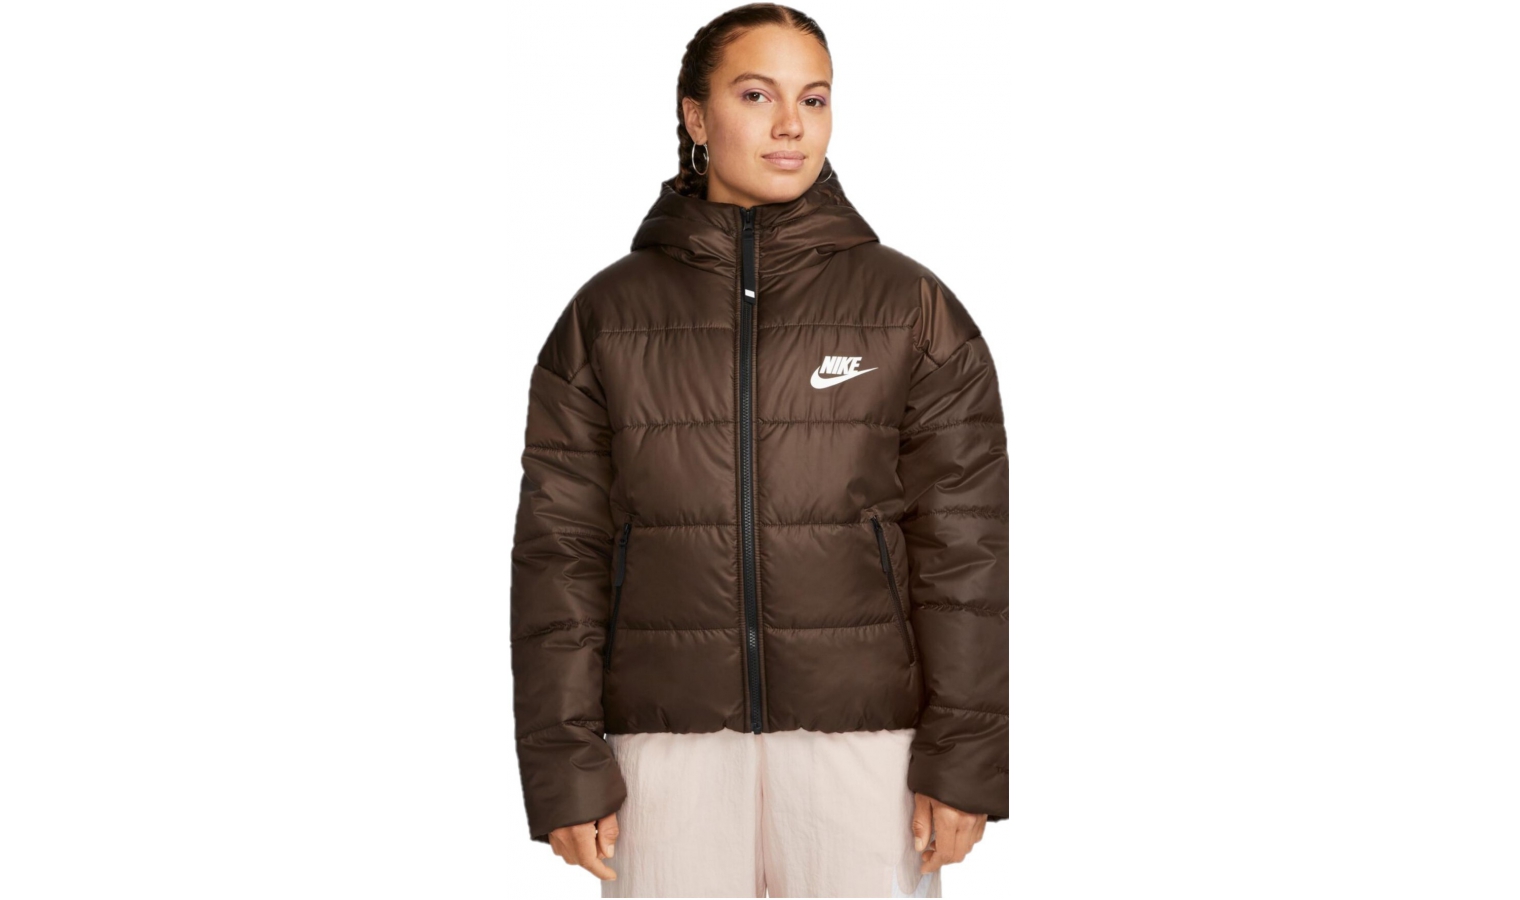 Womens winter jacket NSW brown W W JKT HD Nike AD SYN TF RPL 